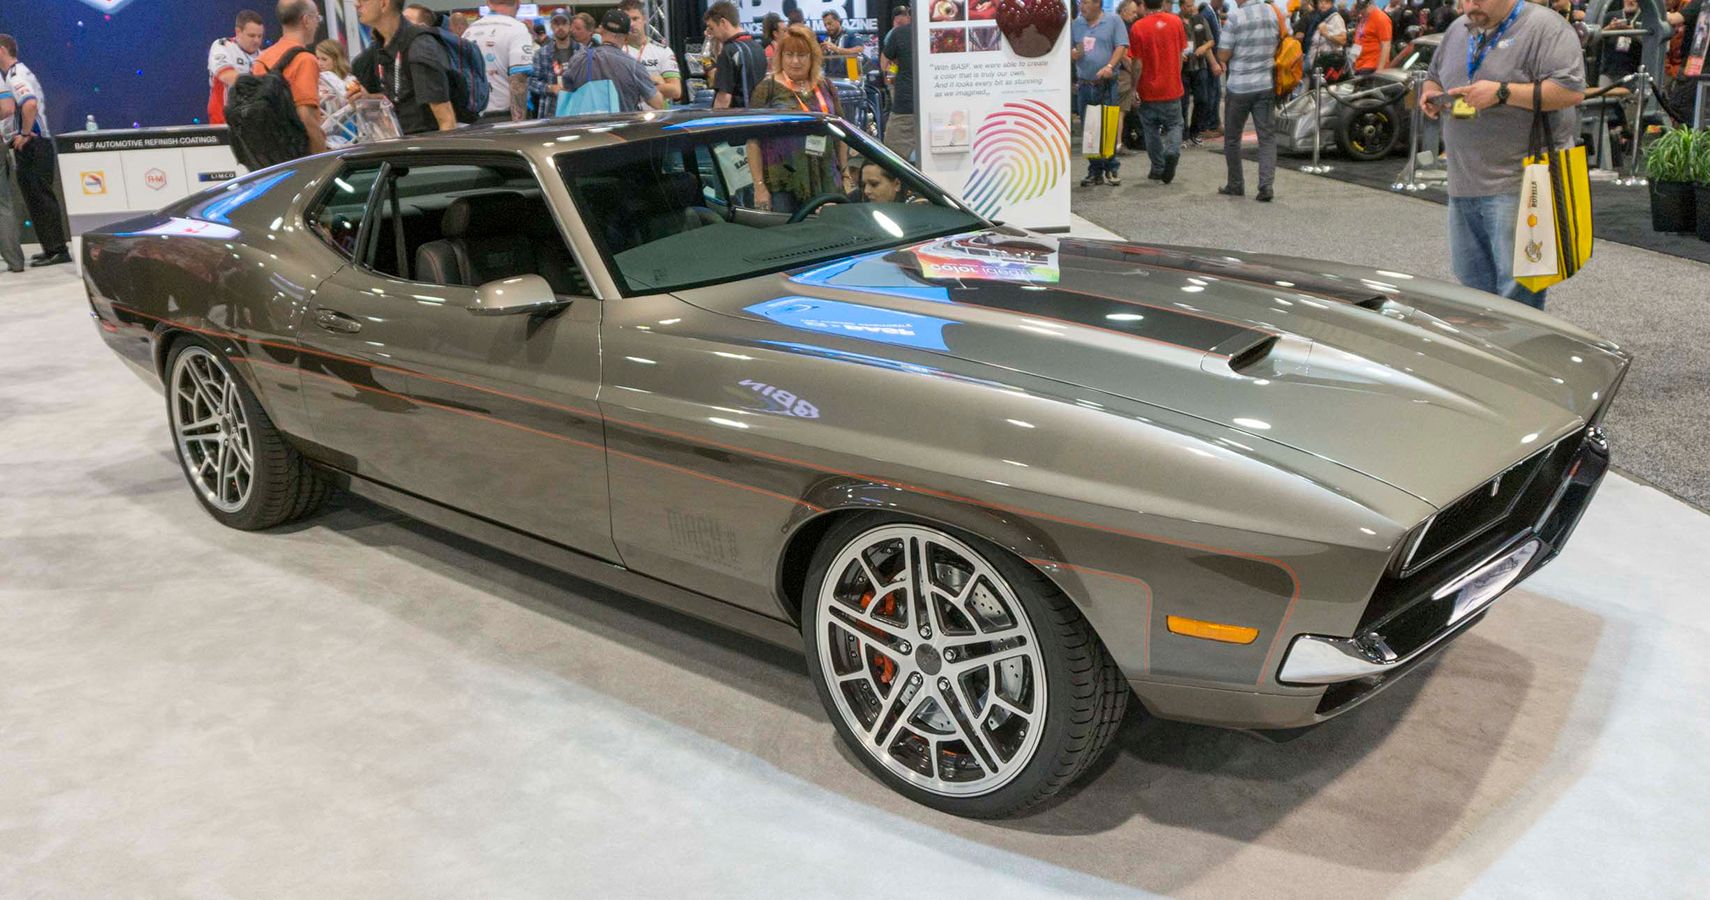 The Mustang Mish-Mash: Mach Foose